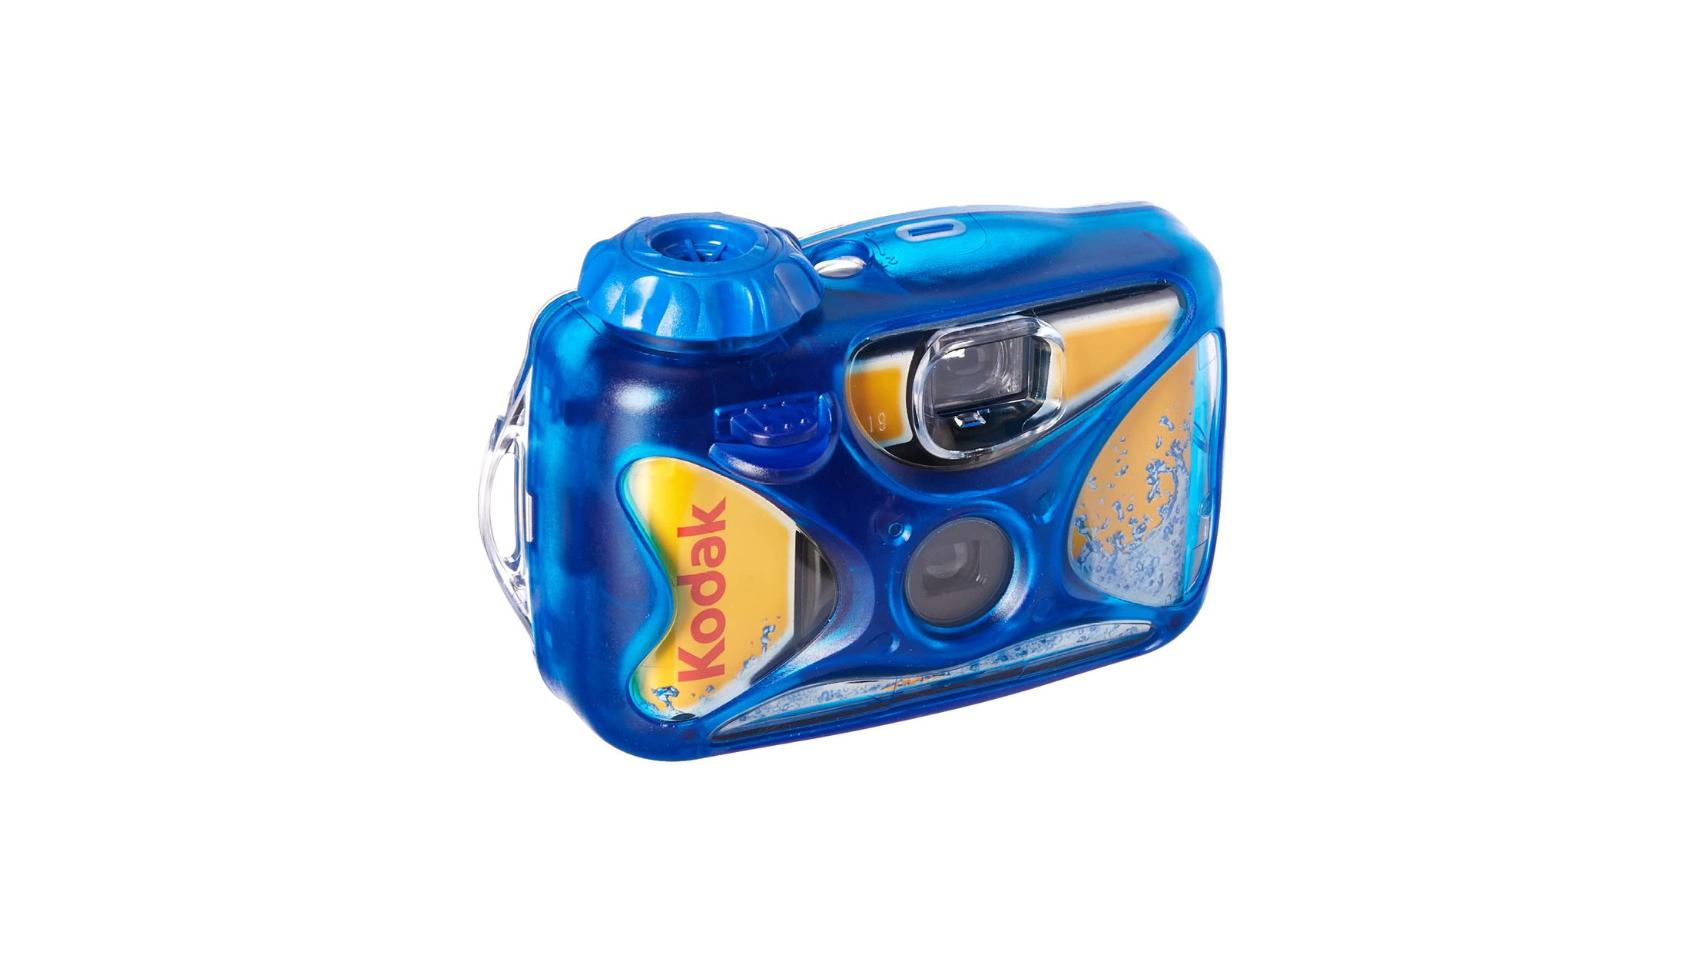 ⭐️ Comprar cámaras desechables baratas ▷ Imprimir Fotos